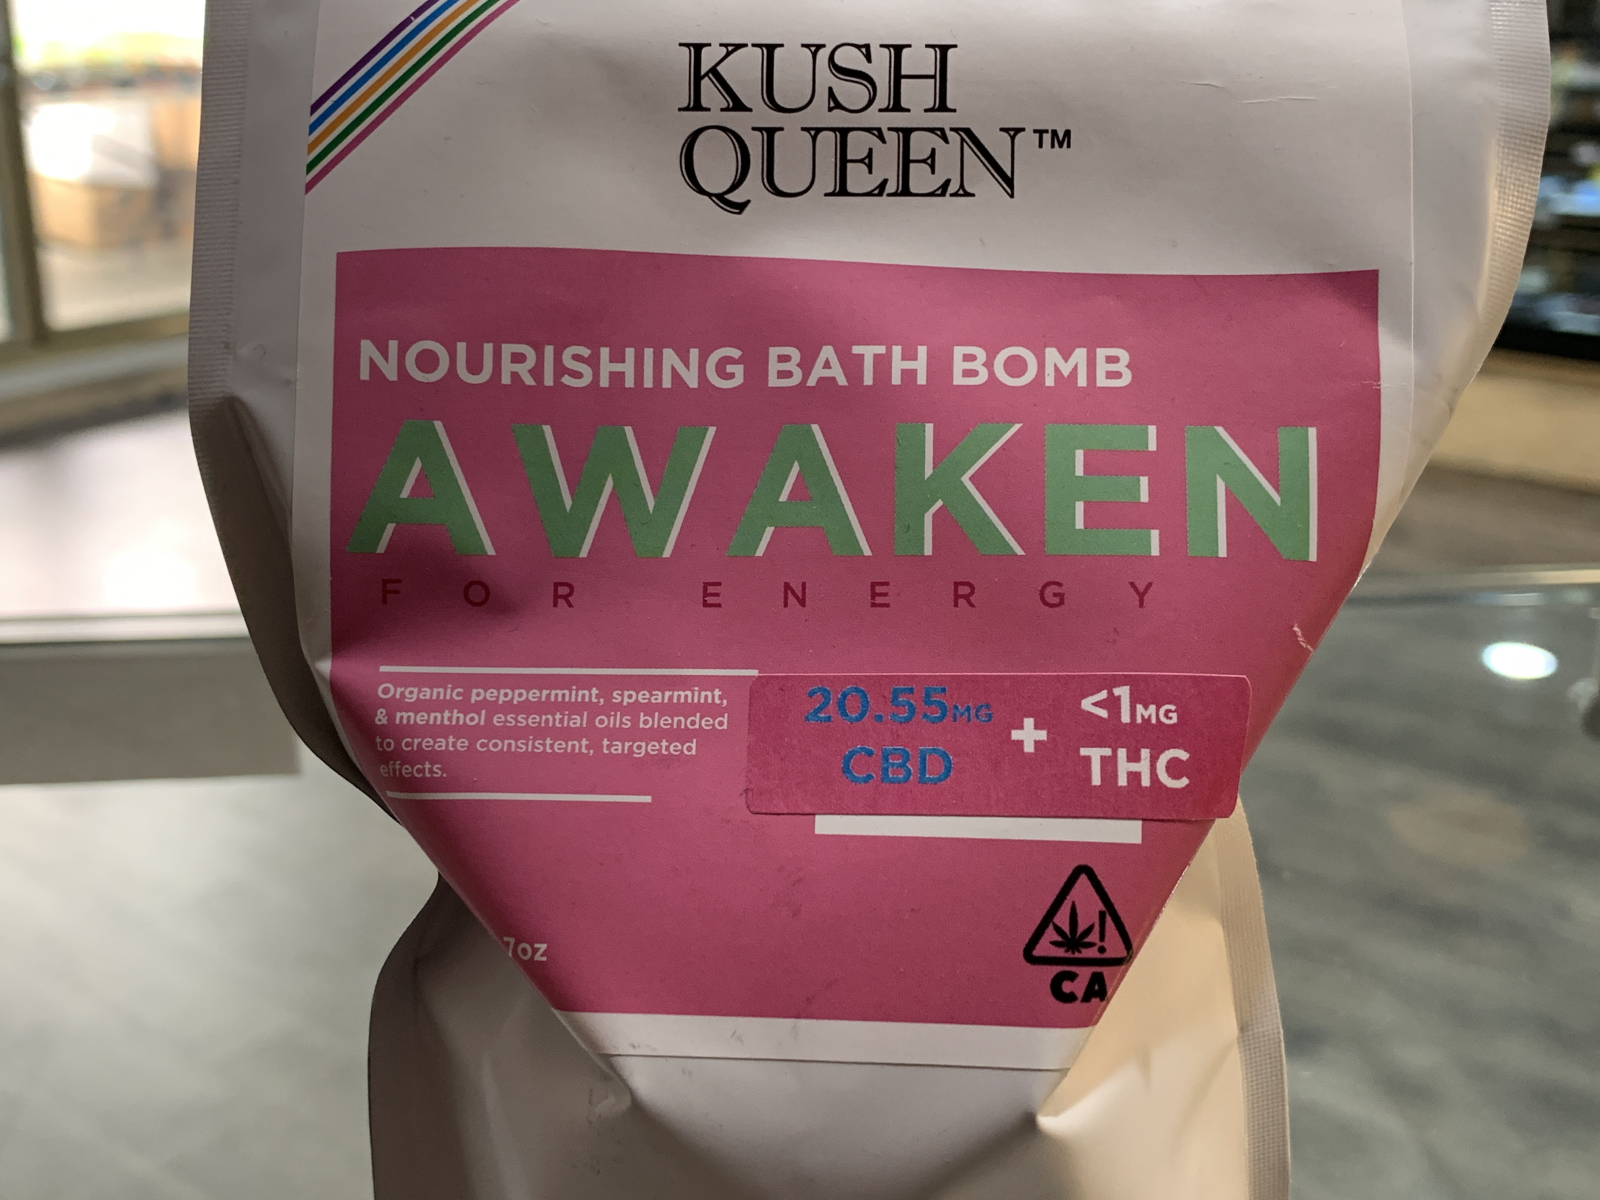 Kush Queen Awaken cbd bath bomb